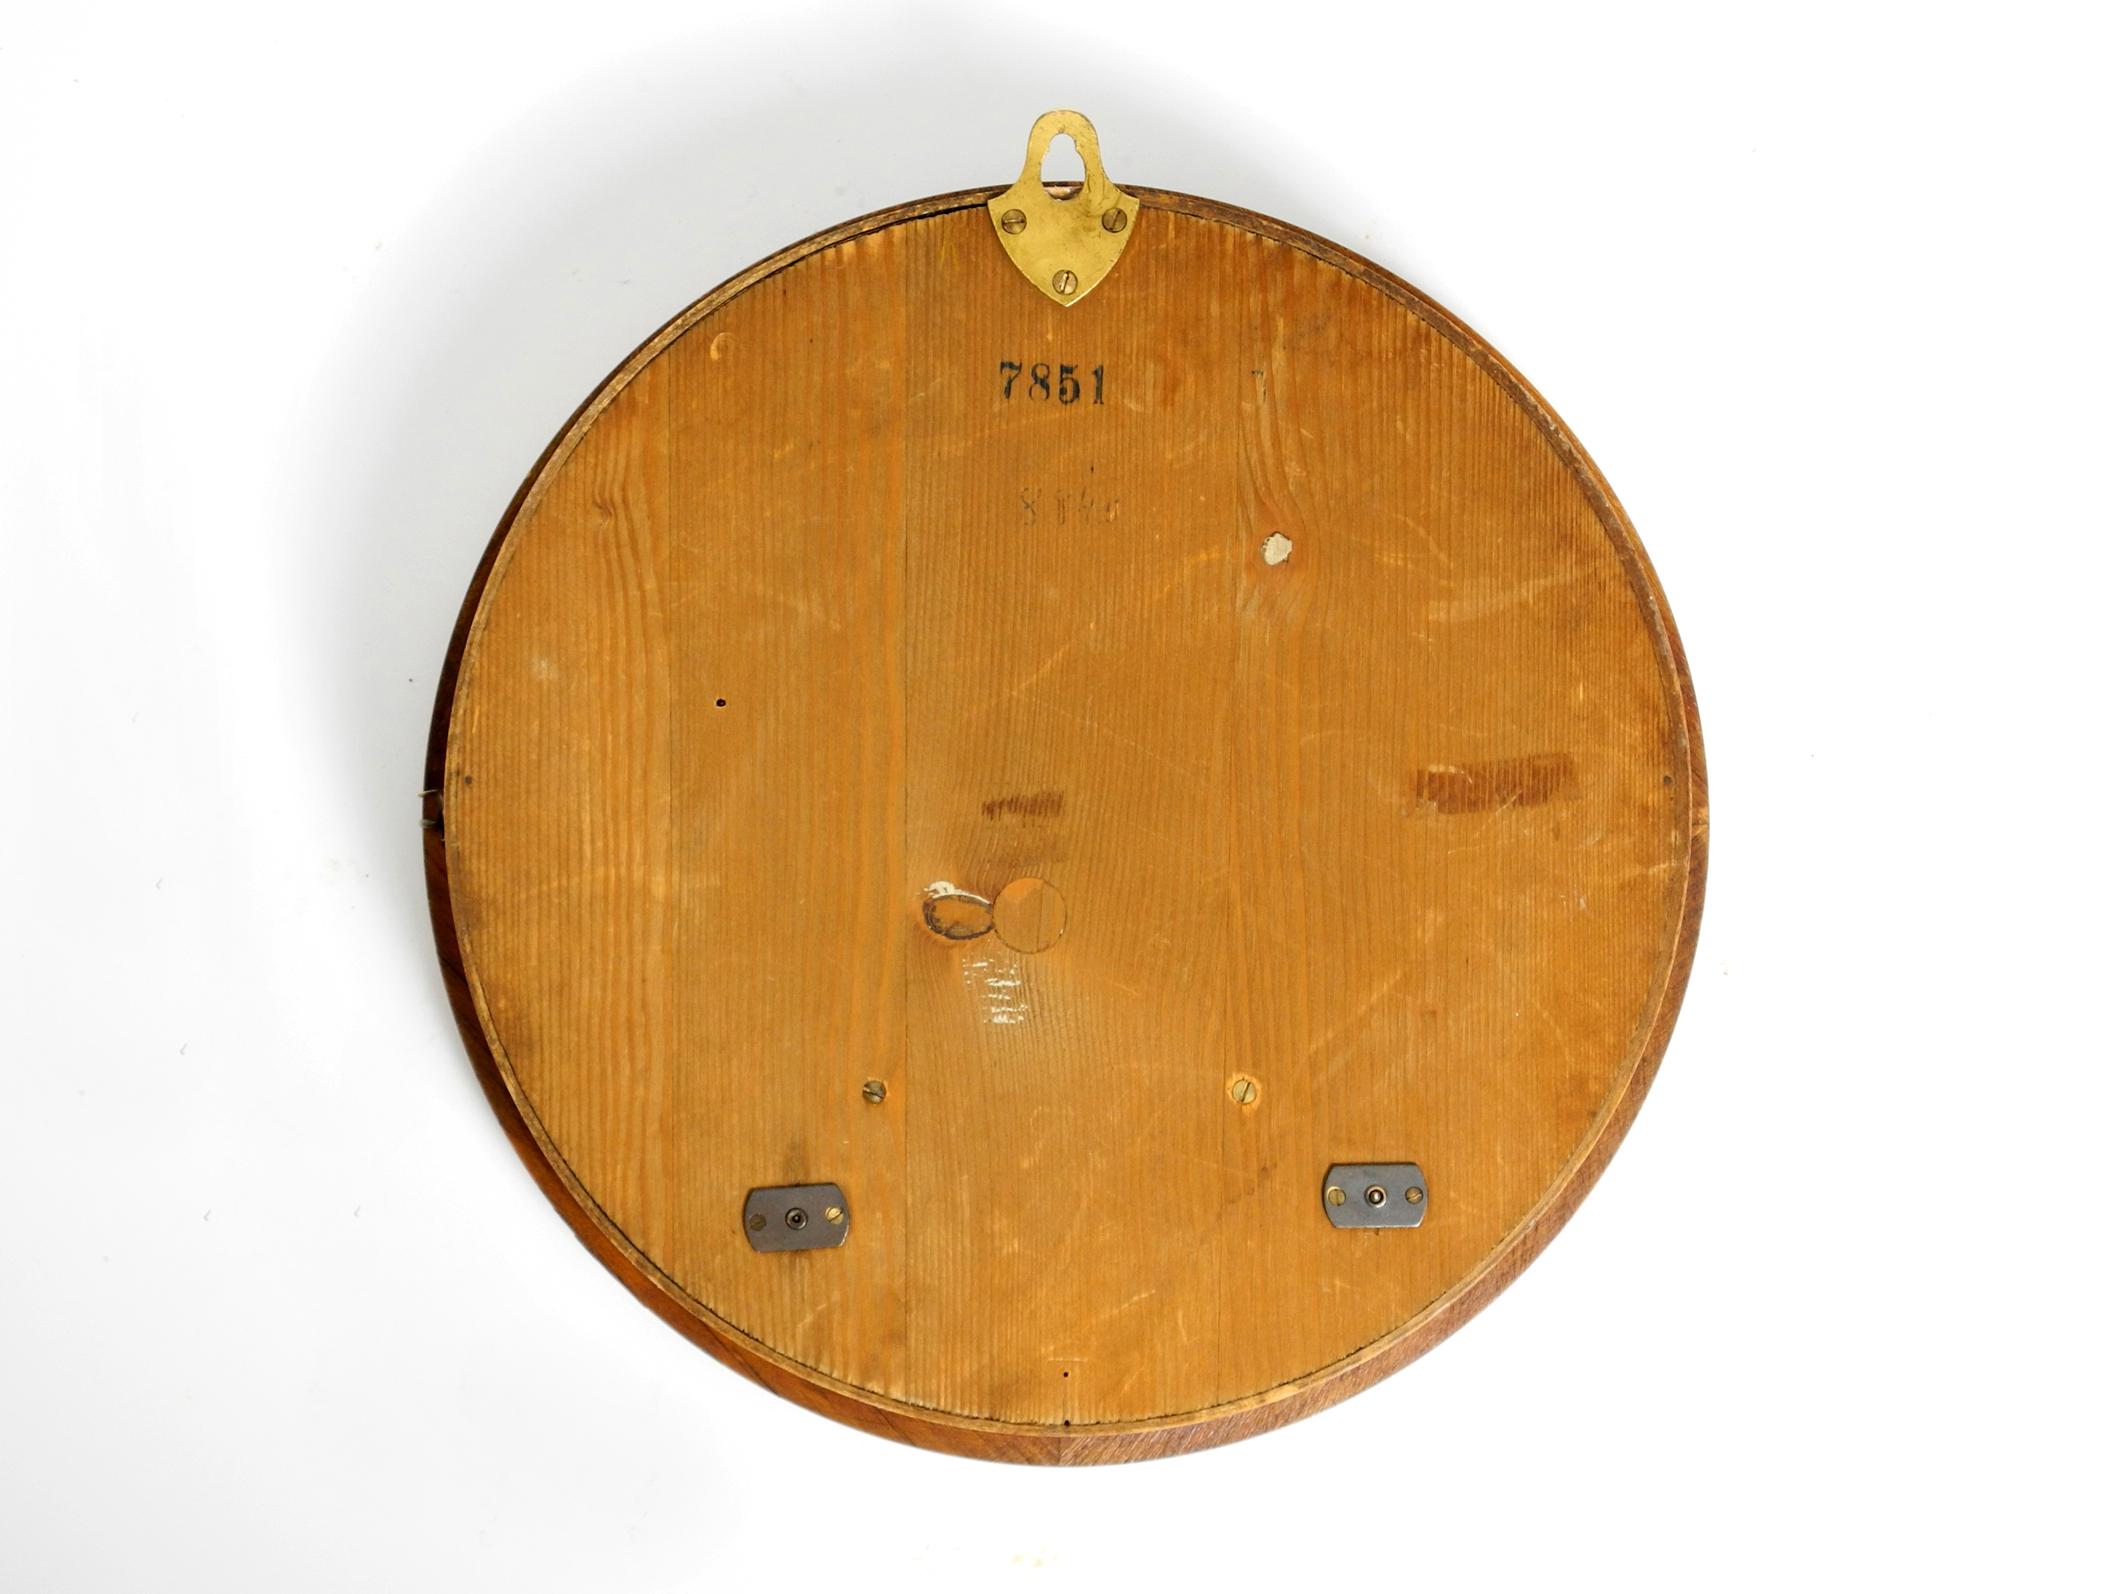 30s ATO wall clock made of oak by the Hamburg-American clock factory Schramberg 1